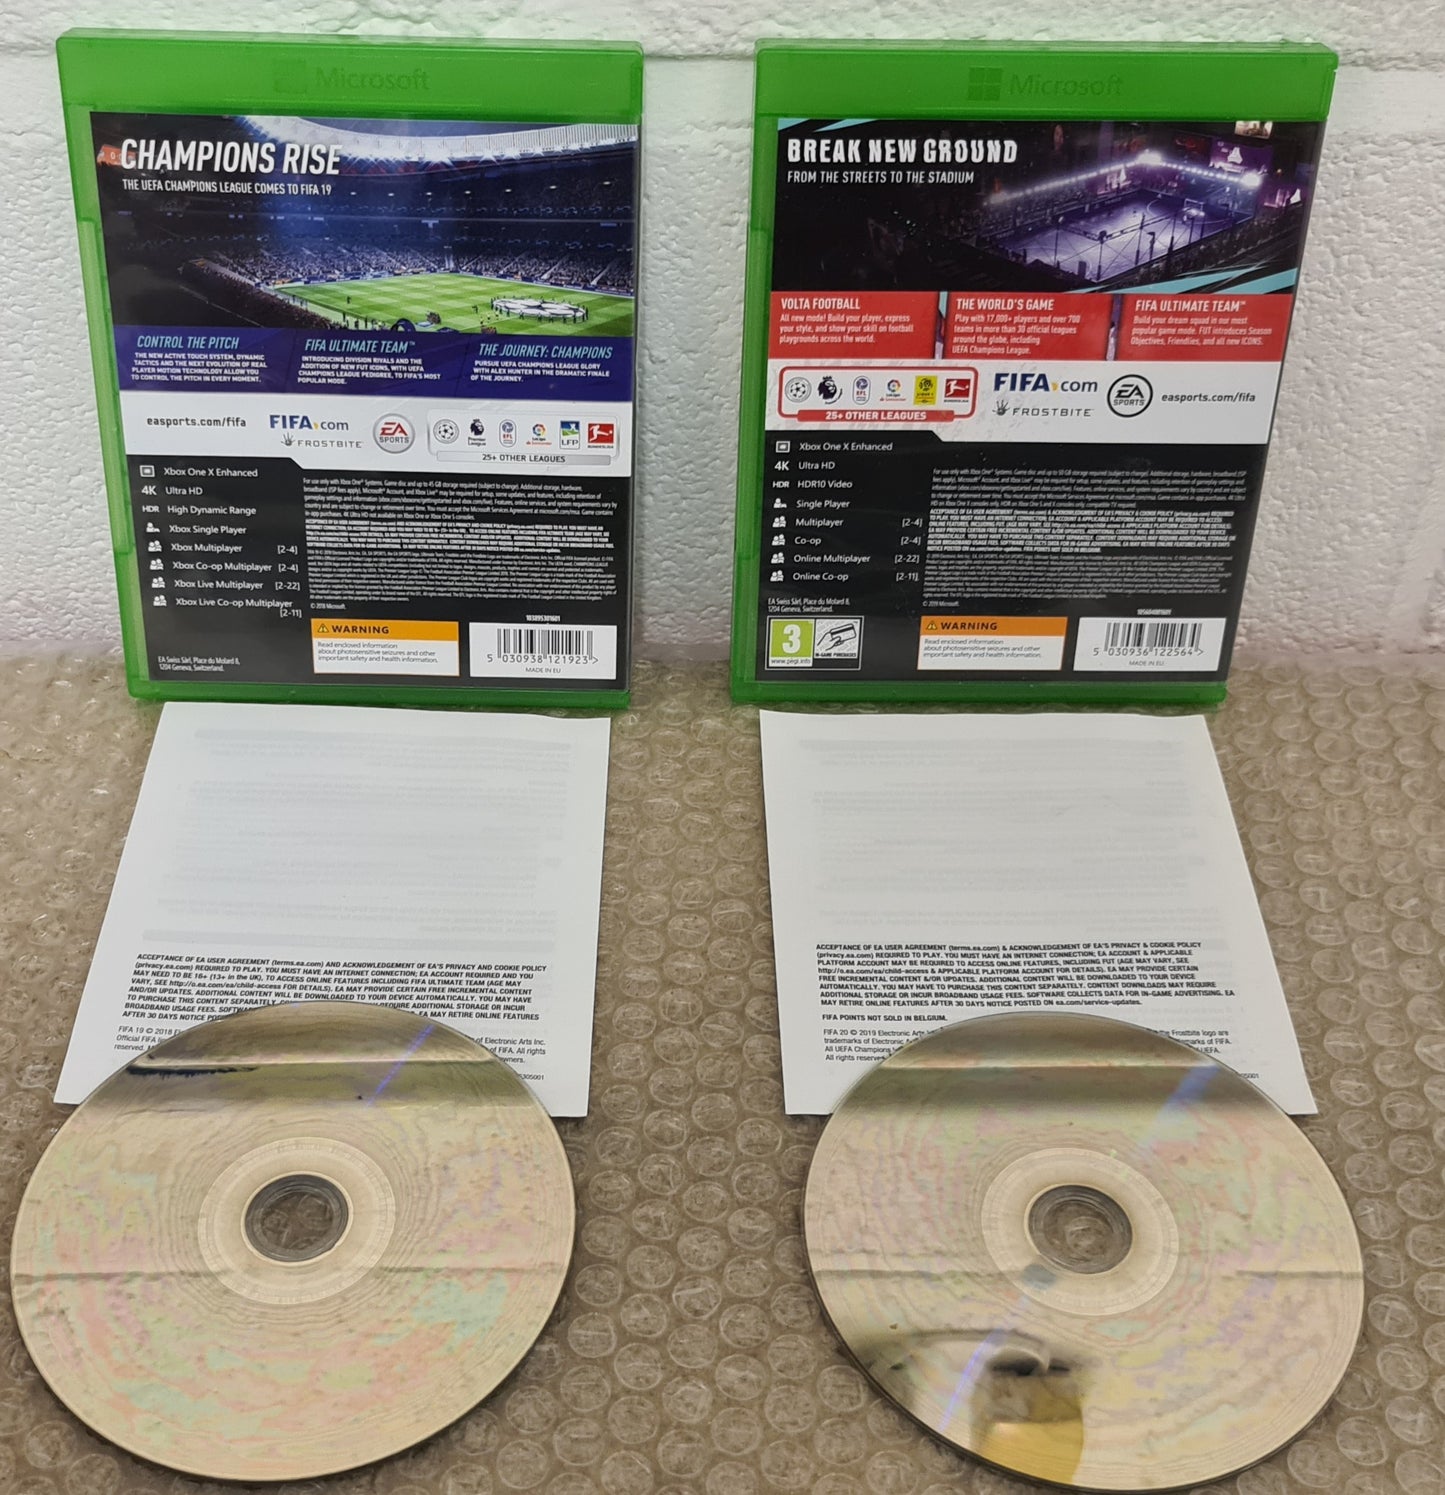 Fifa 19 & 20 Microsoft Xbox One Game Bundle